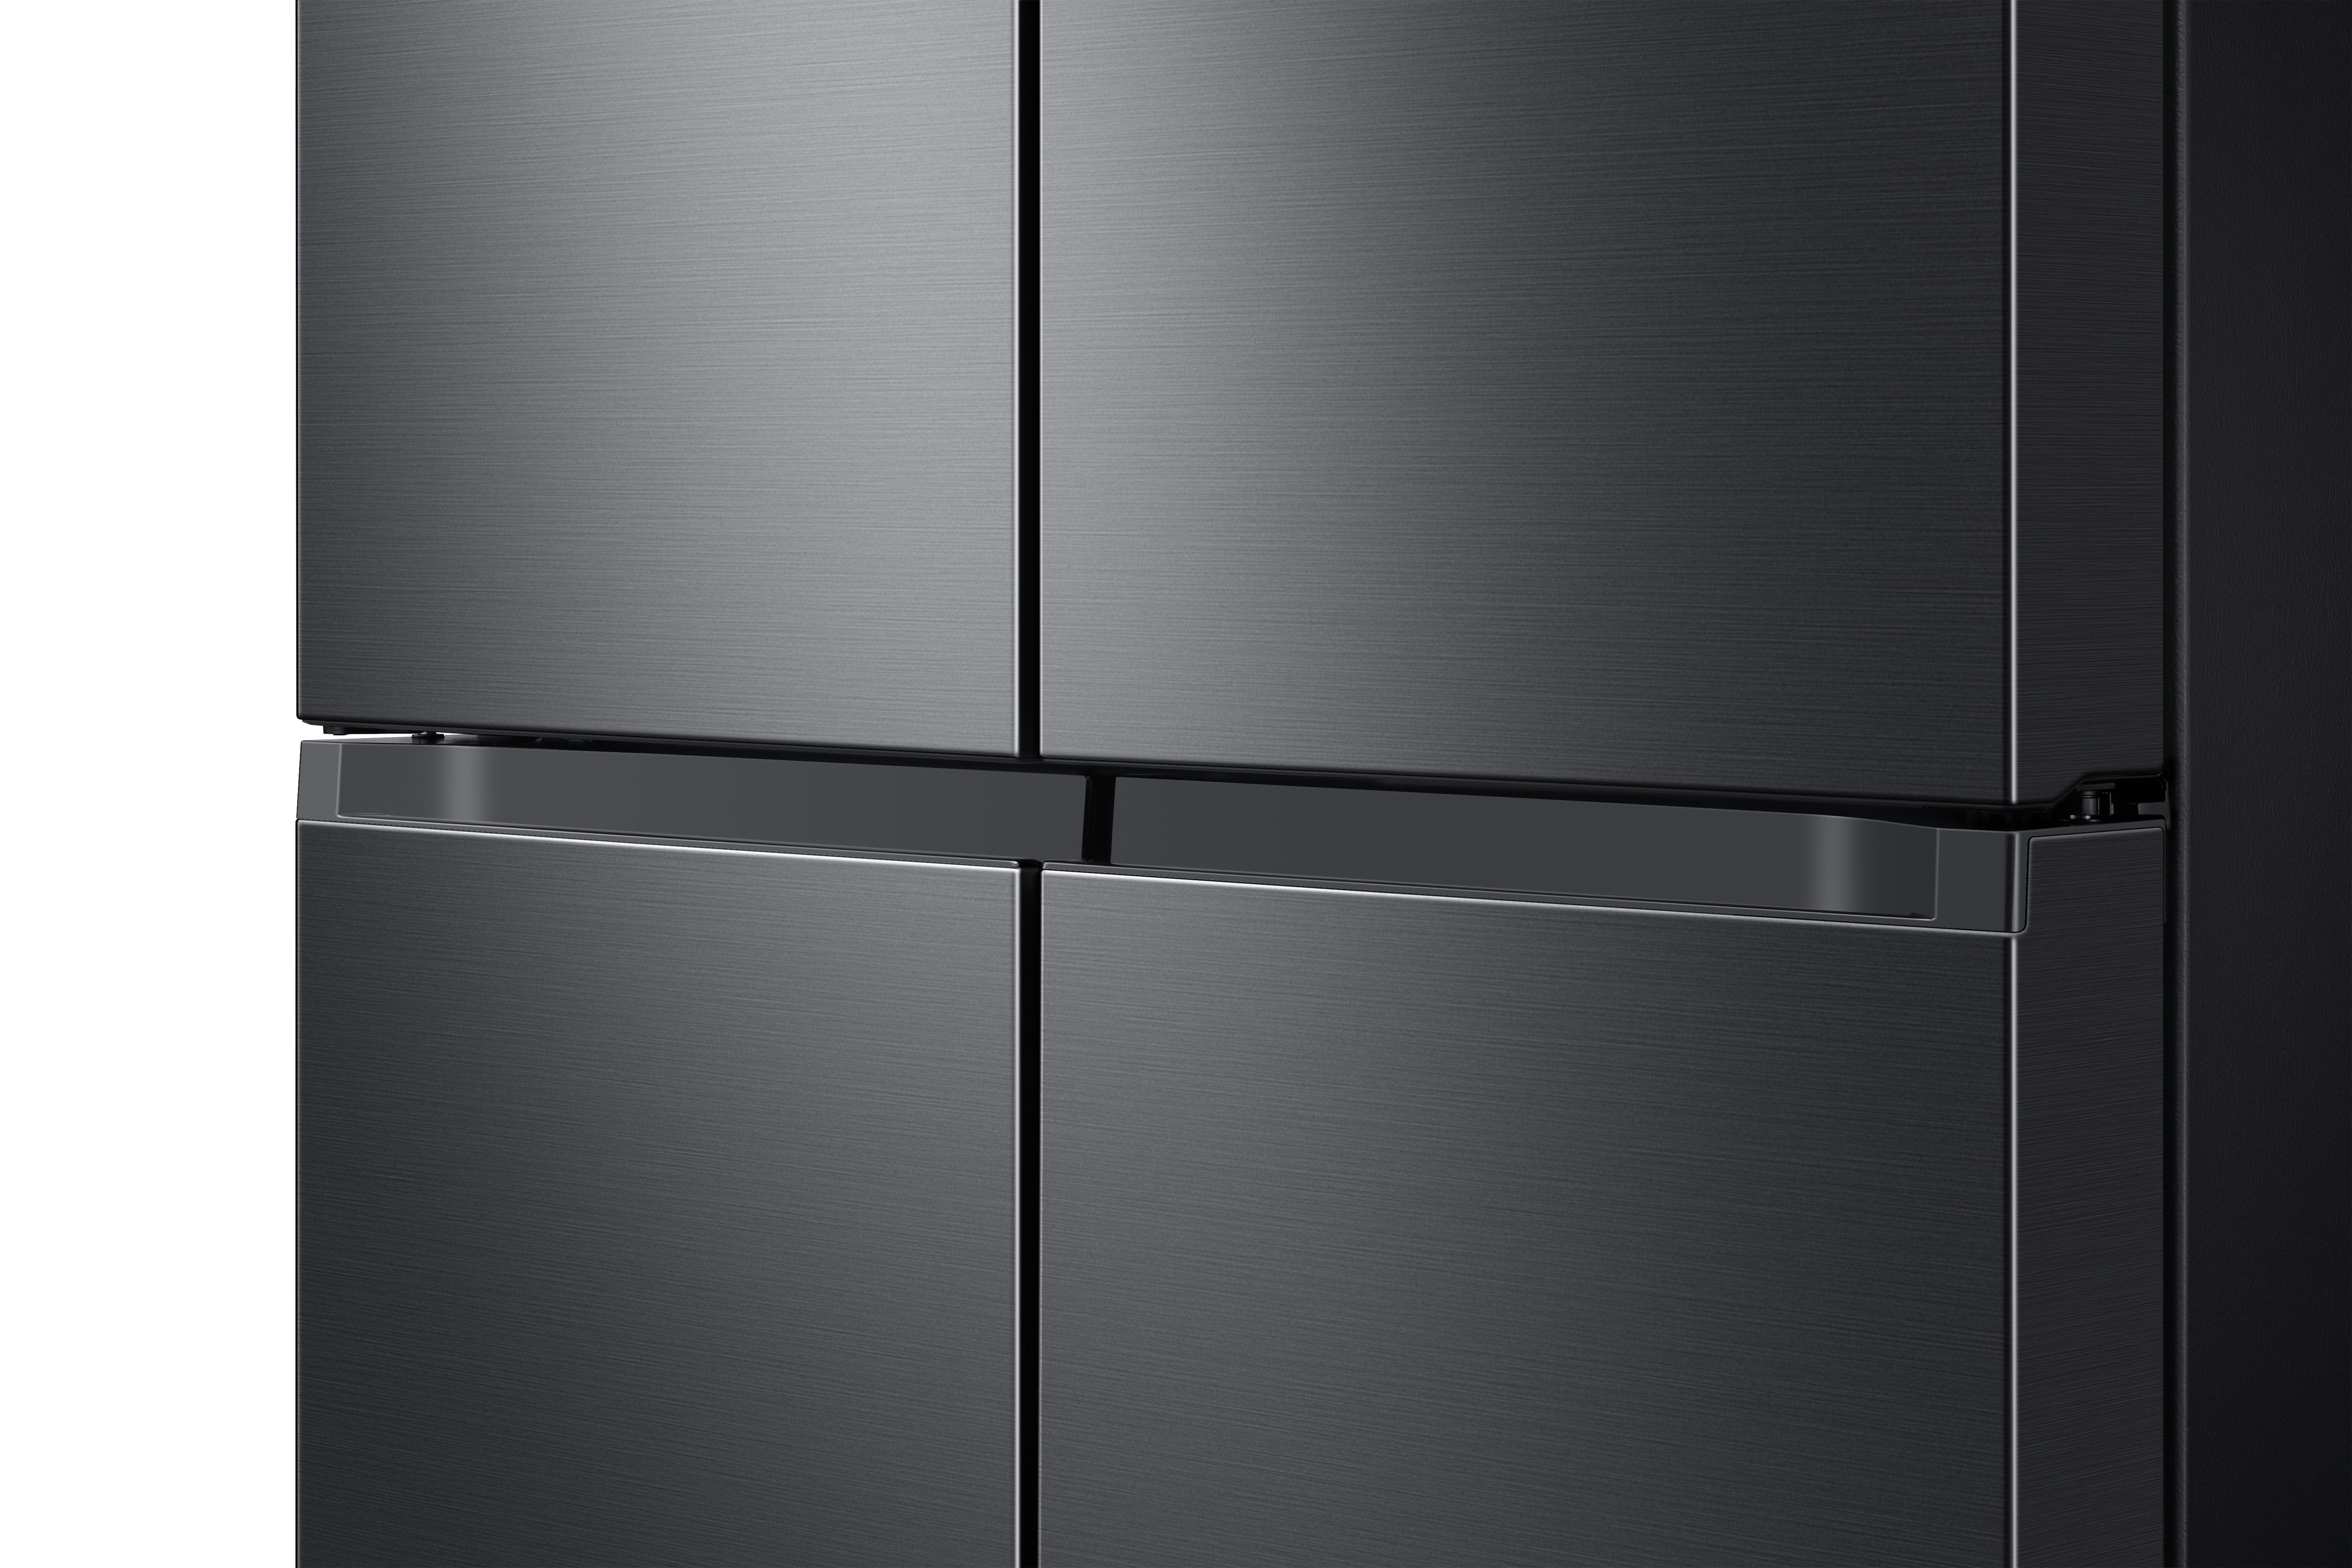 Samsung - 35.875 Inch 29 cu. ft 4-Door French Door Refrigerator in Black Stainless - RF29A9671SG